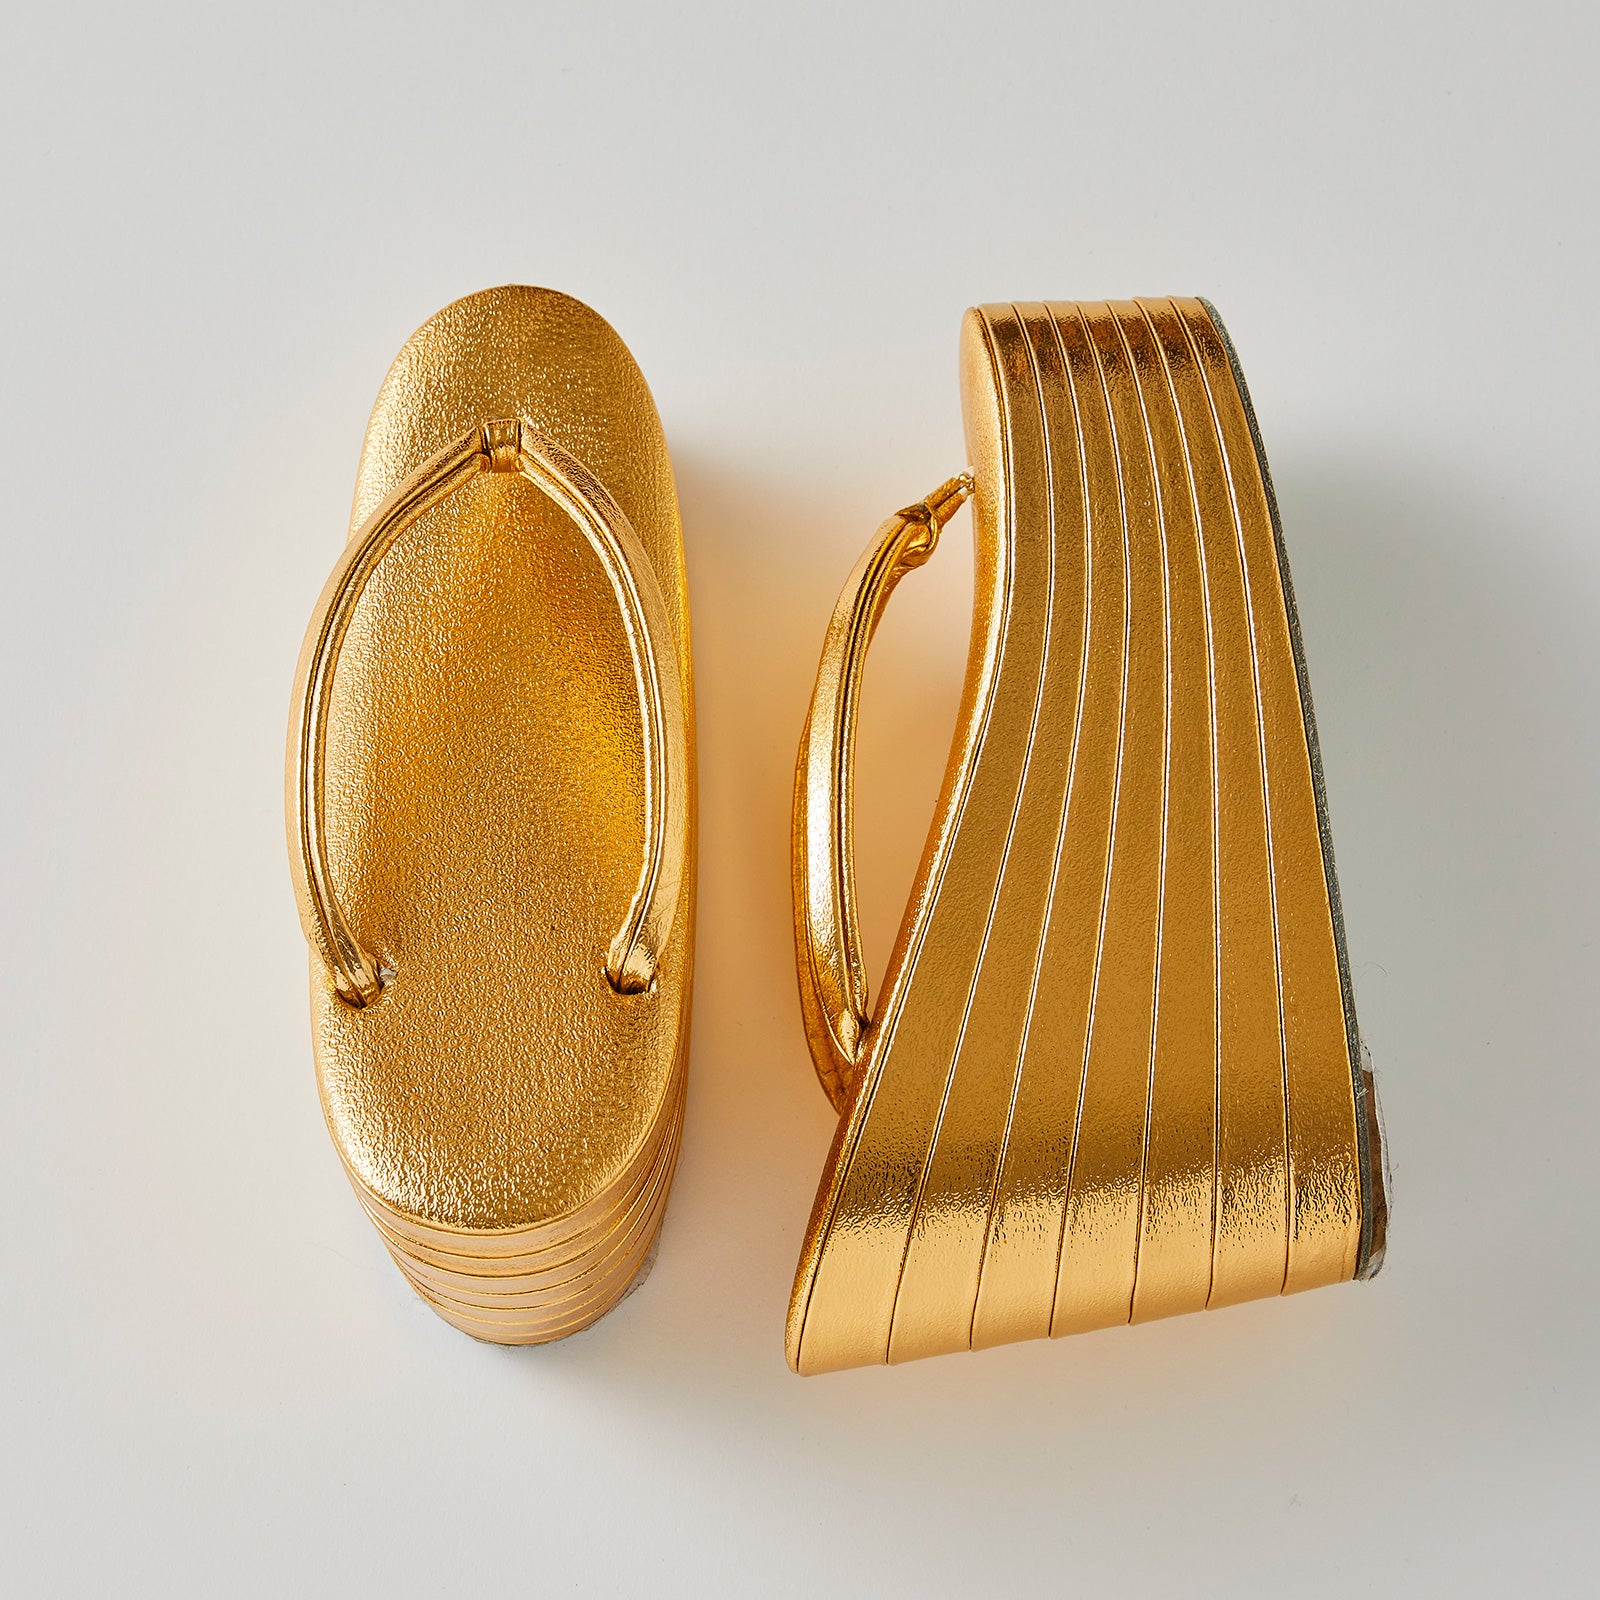 "Seven-tier platform sandals gold"